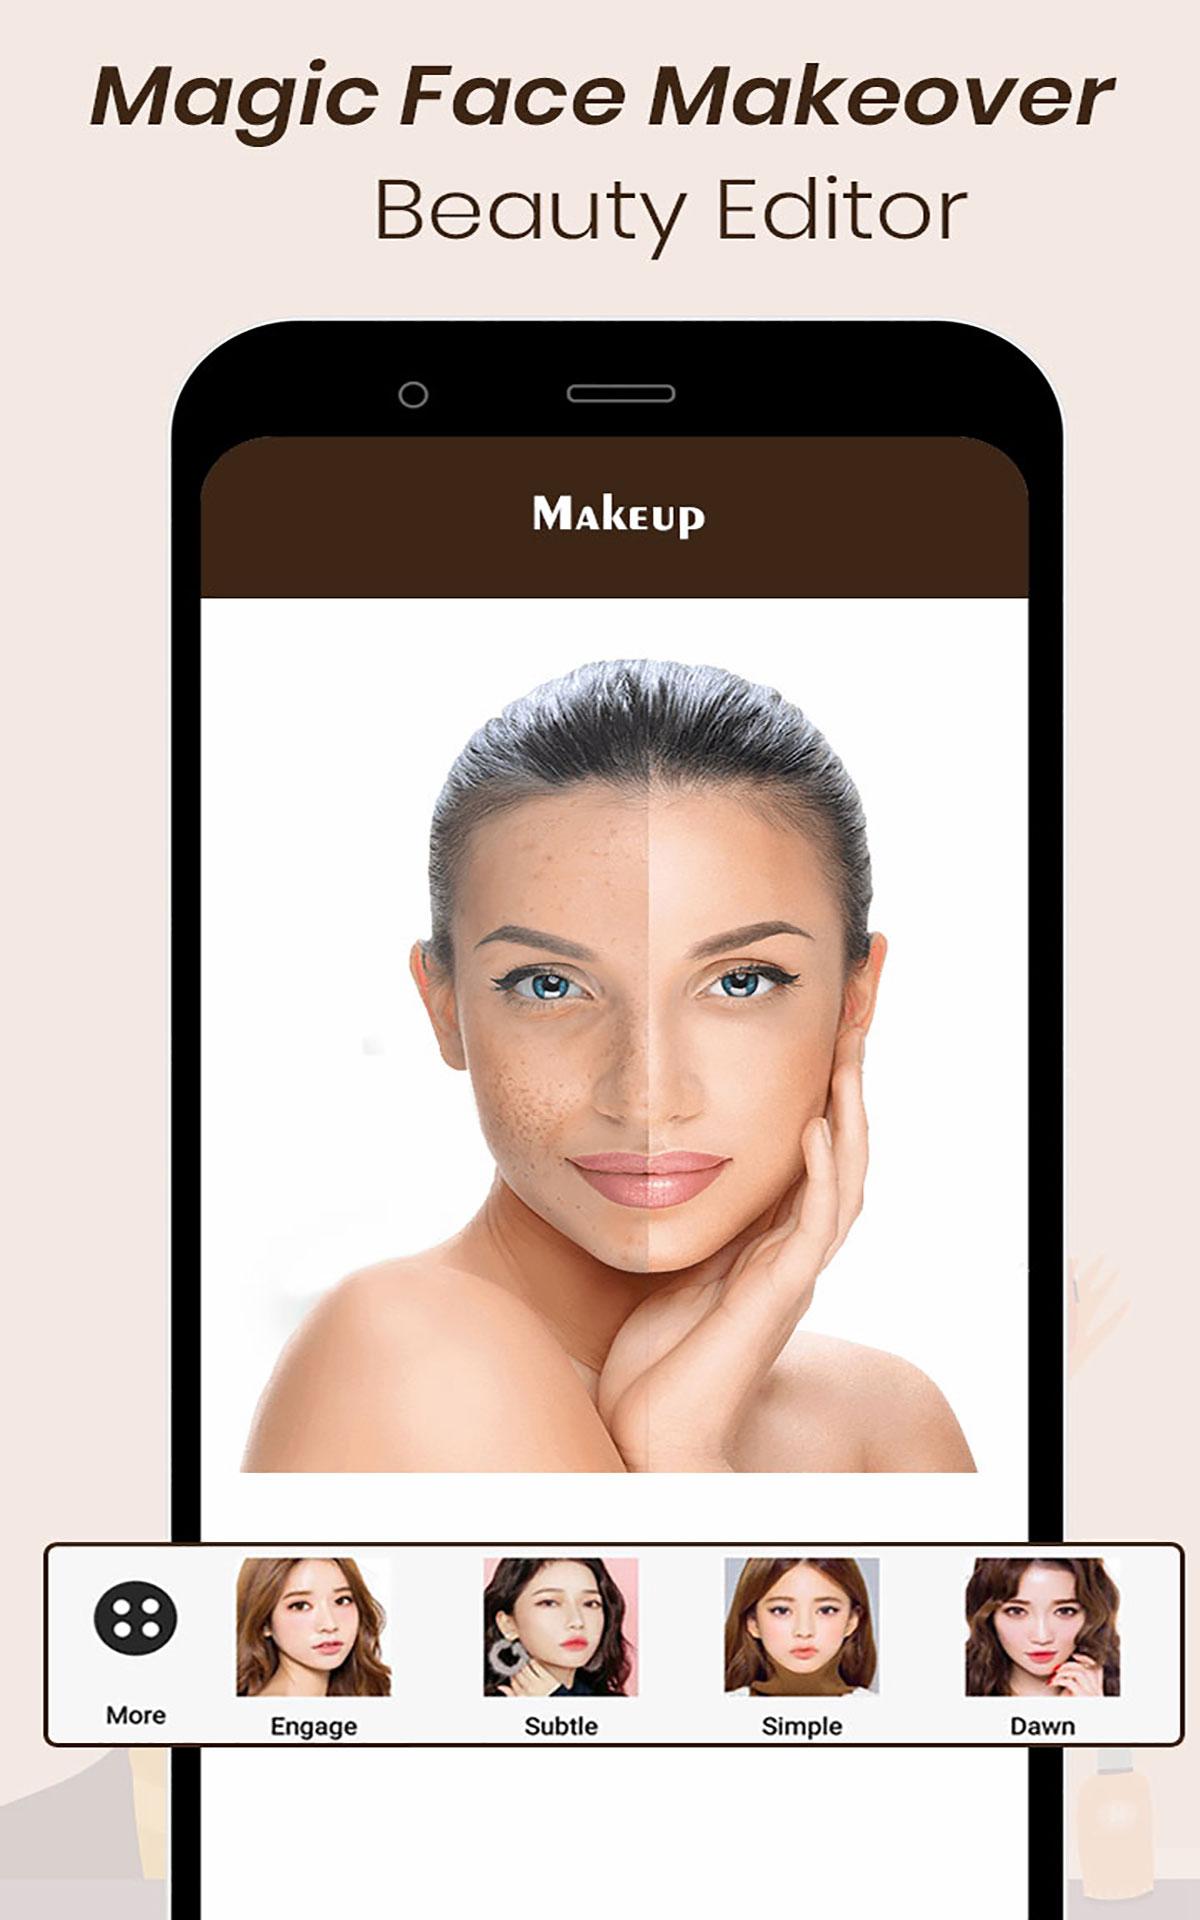 Magic Face Makeover - Beauty Editor 1.0 Screenshot 16